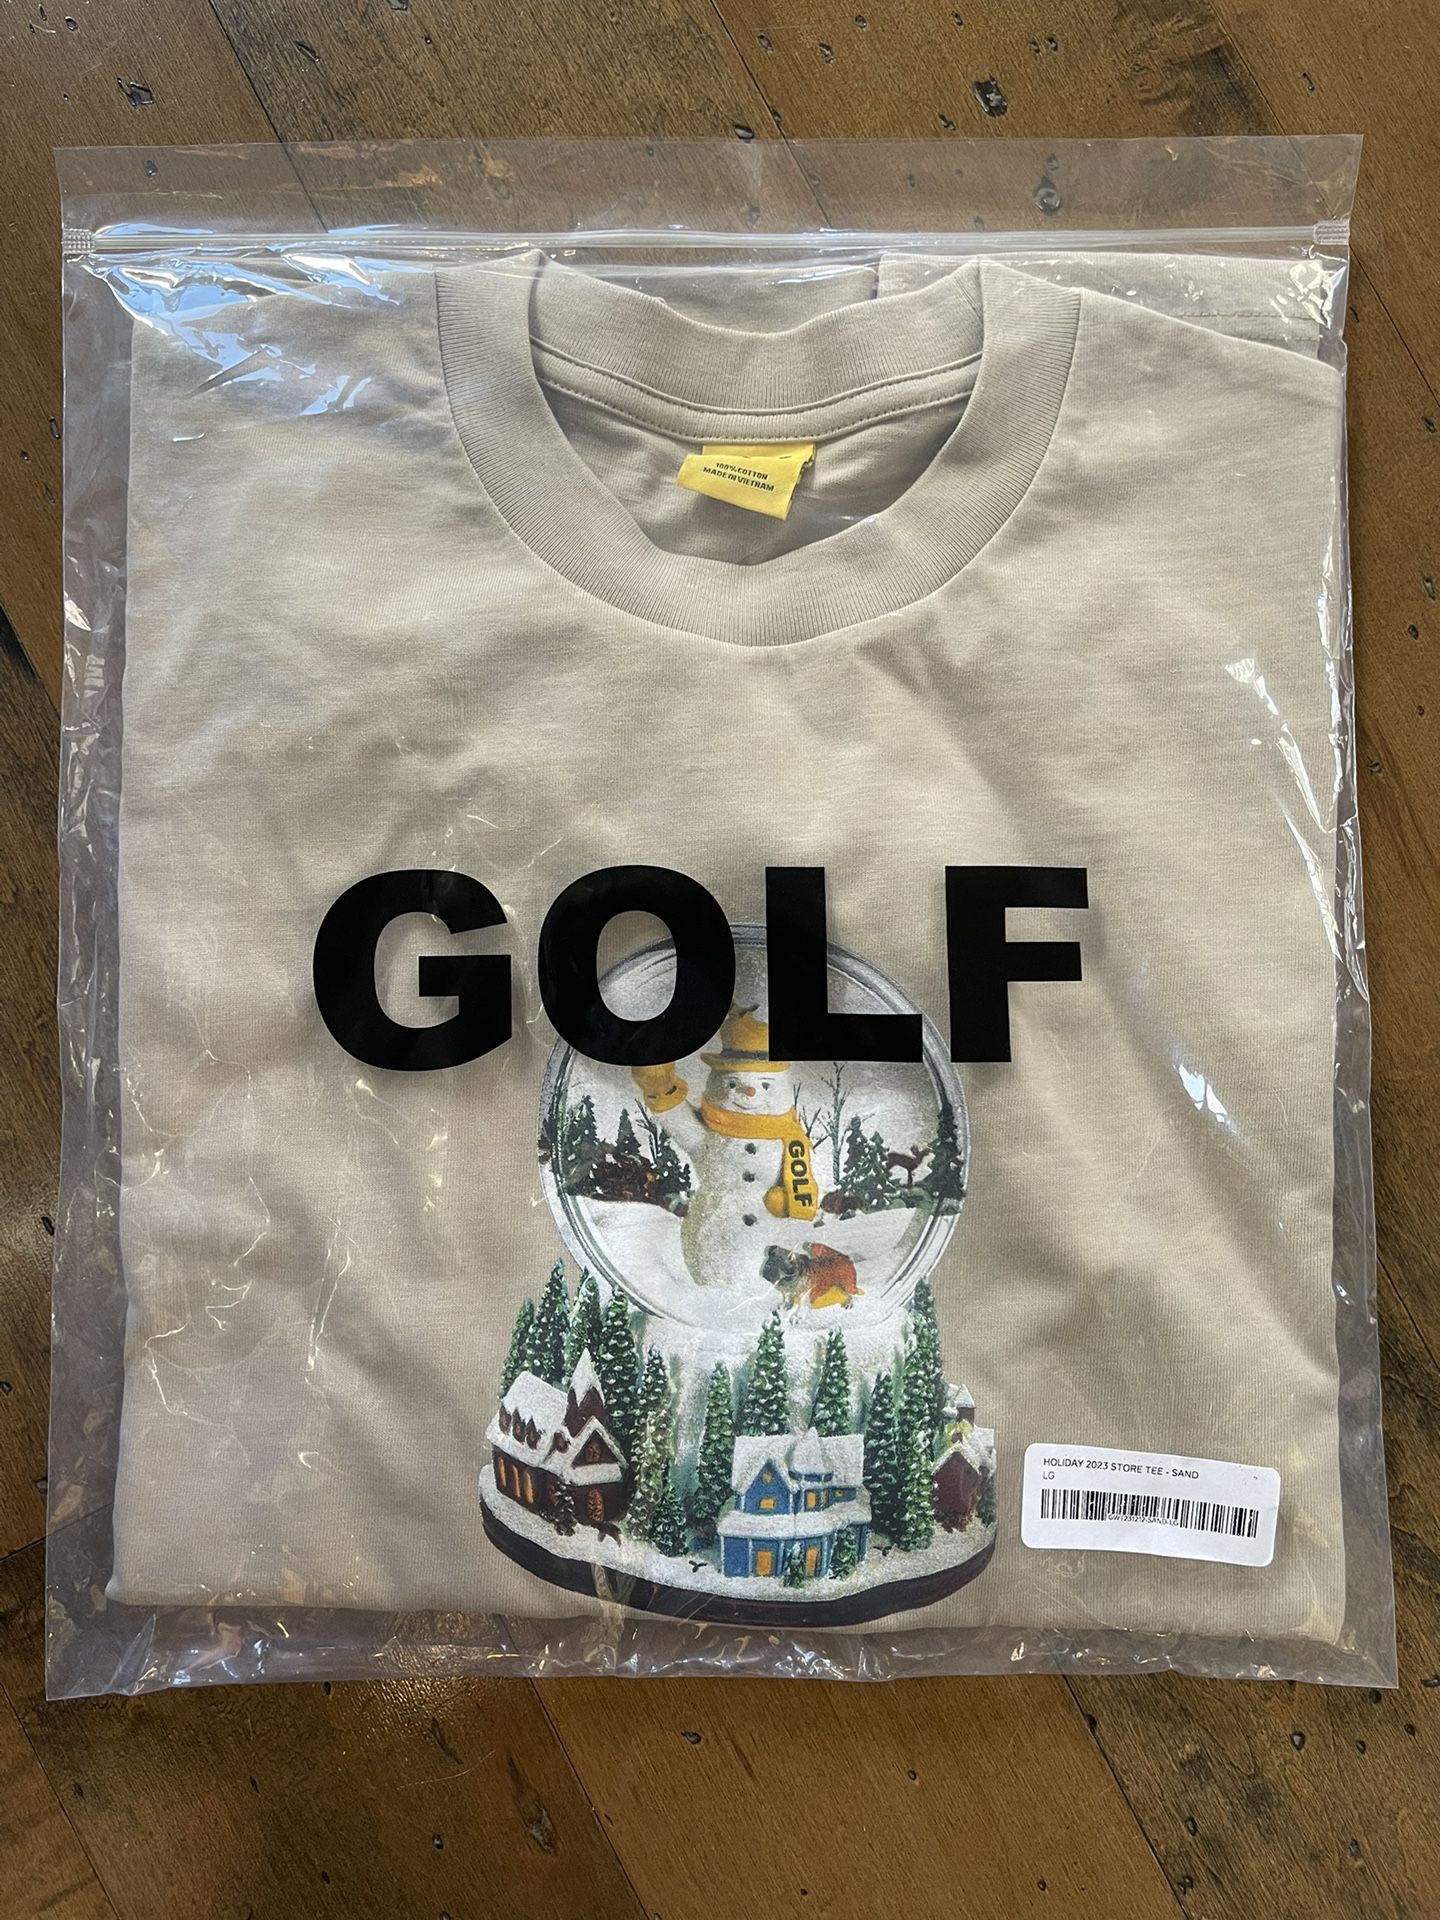 GOLF WANG Shirt Large (NEW)